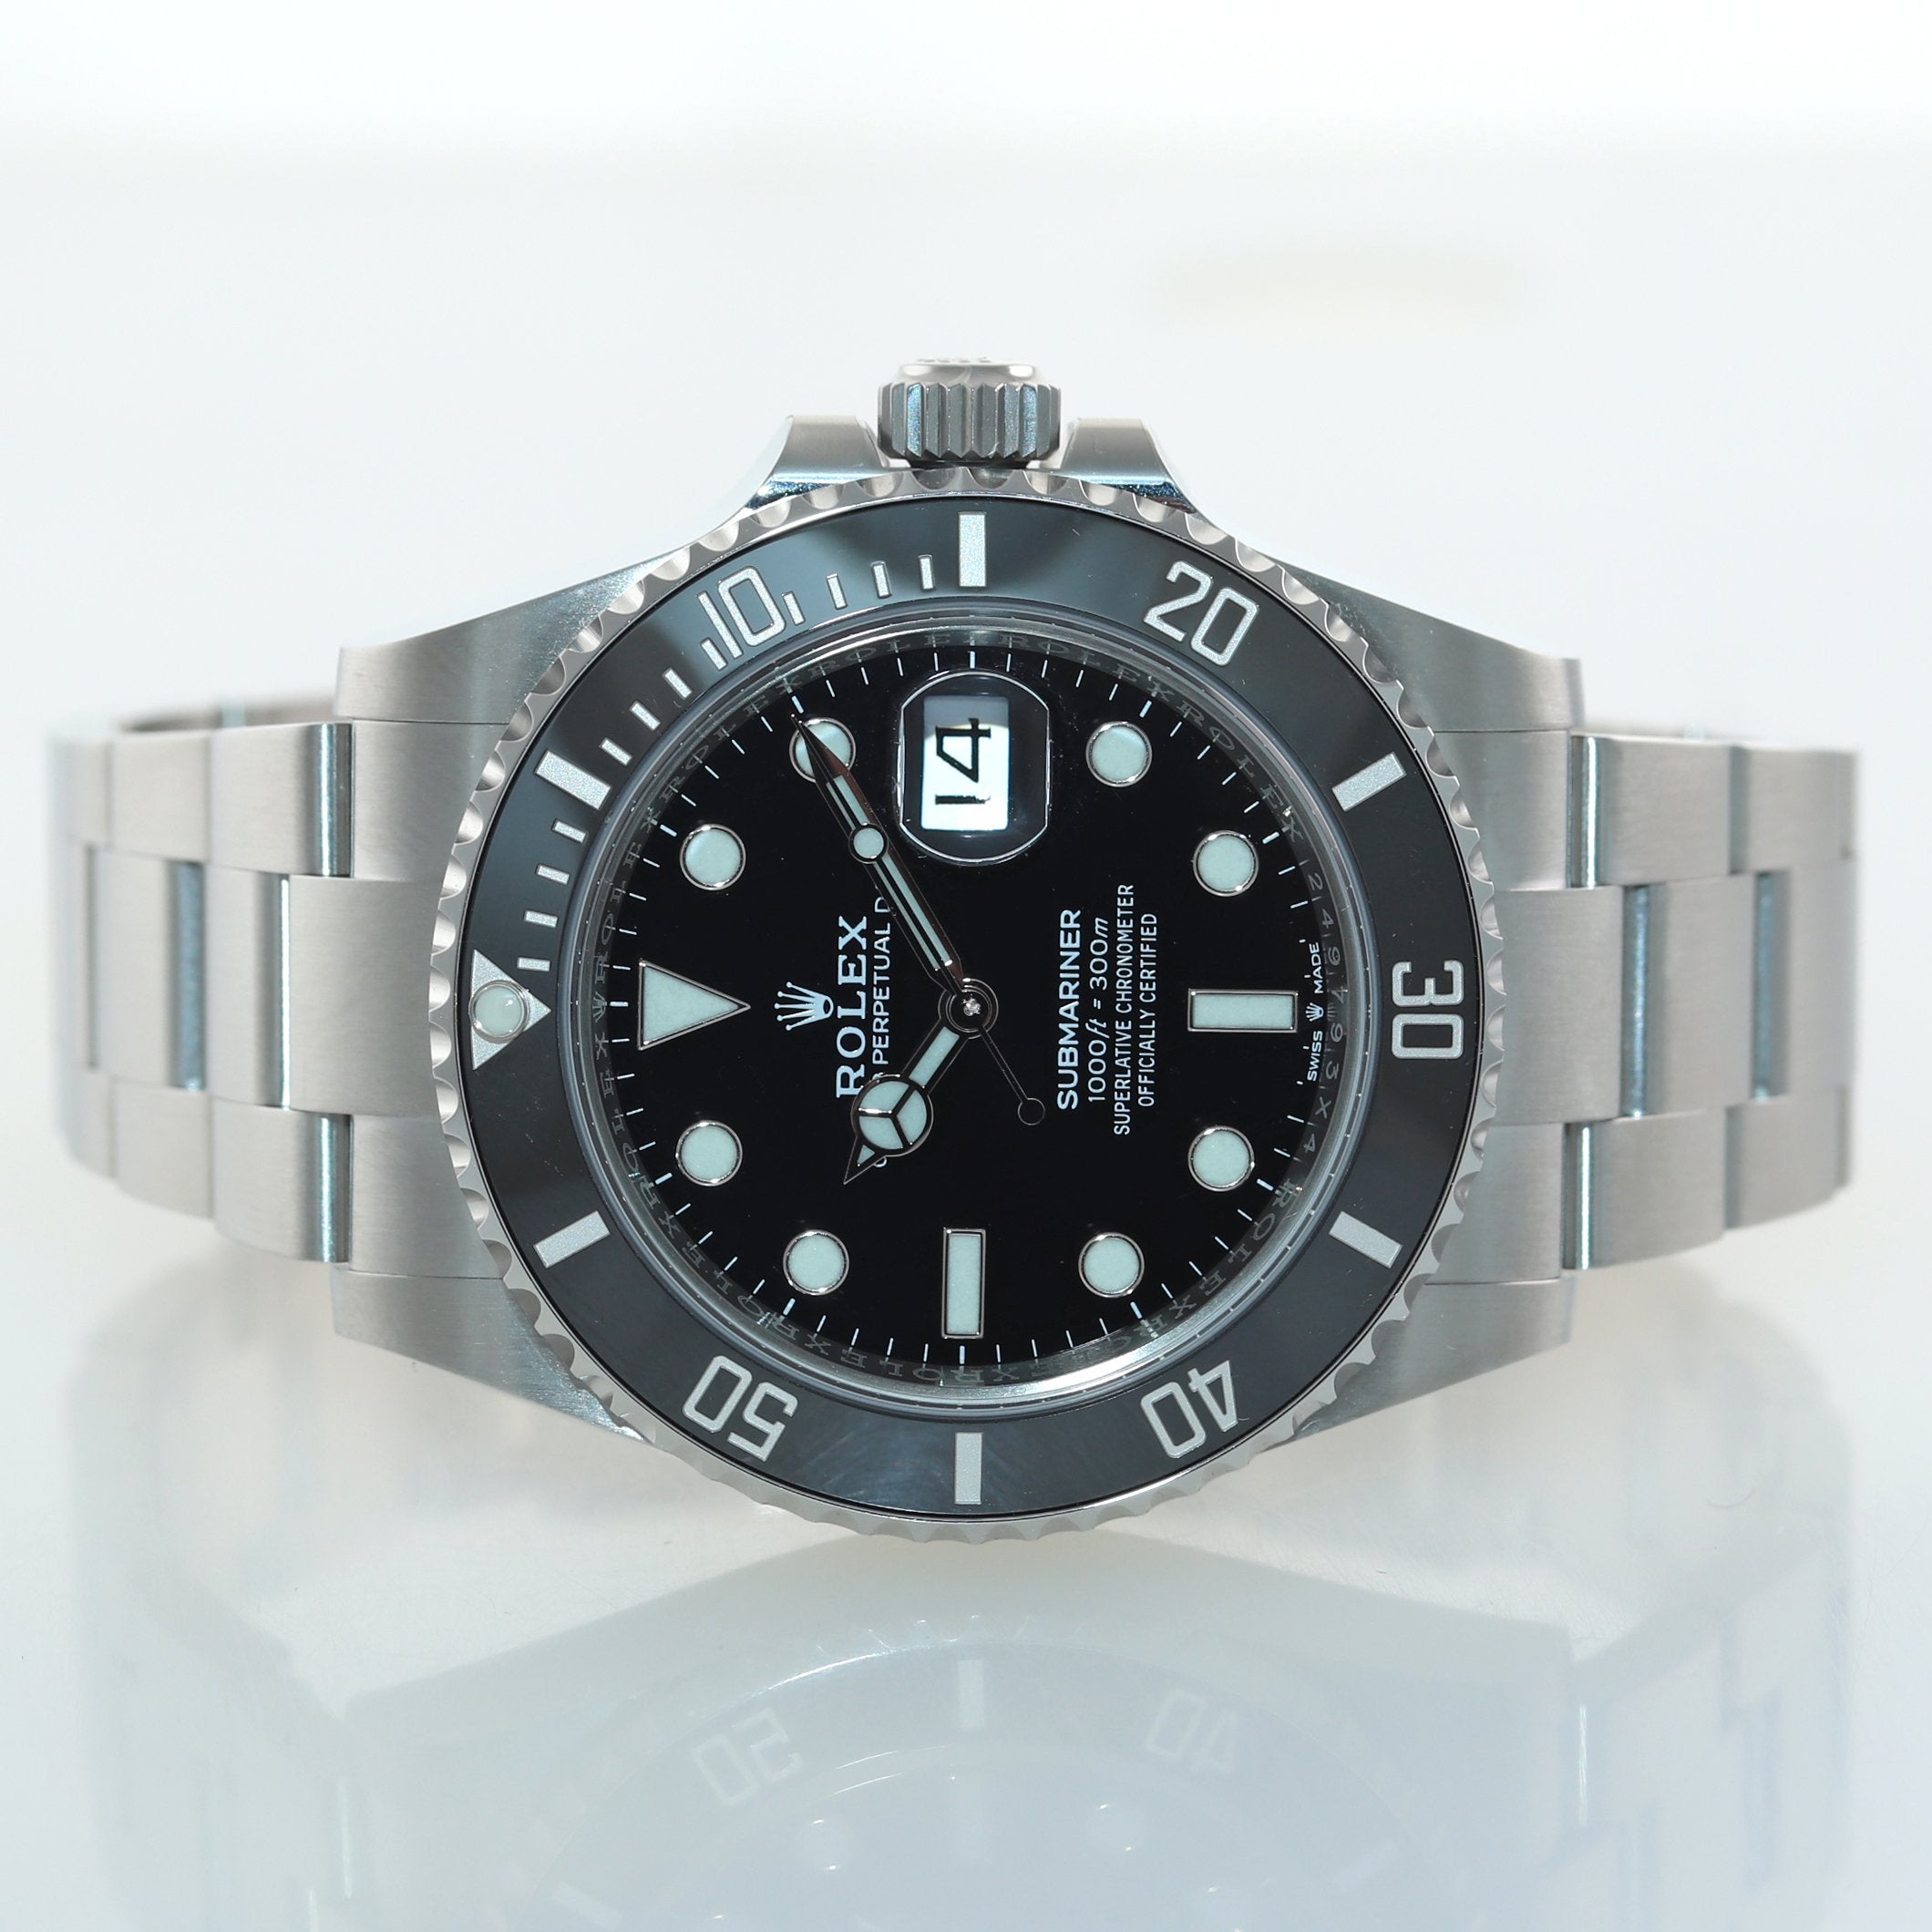 2020 PAPERS NEW Rolex Submariner 41mm Black Ceramic 126610LN Watch Box